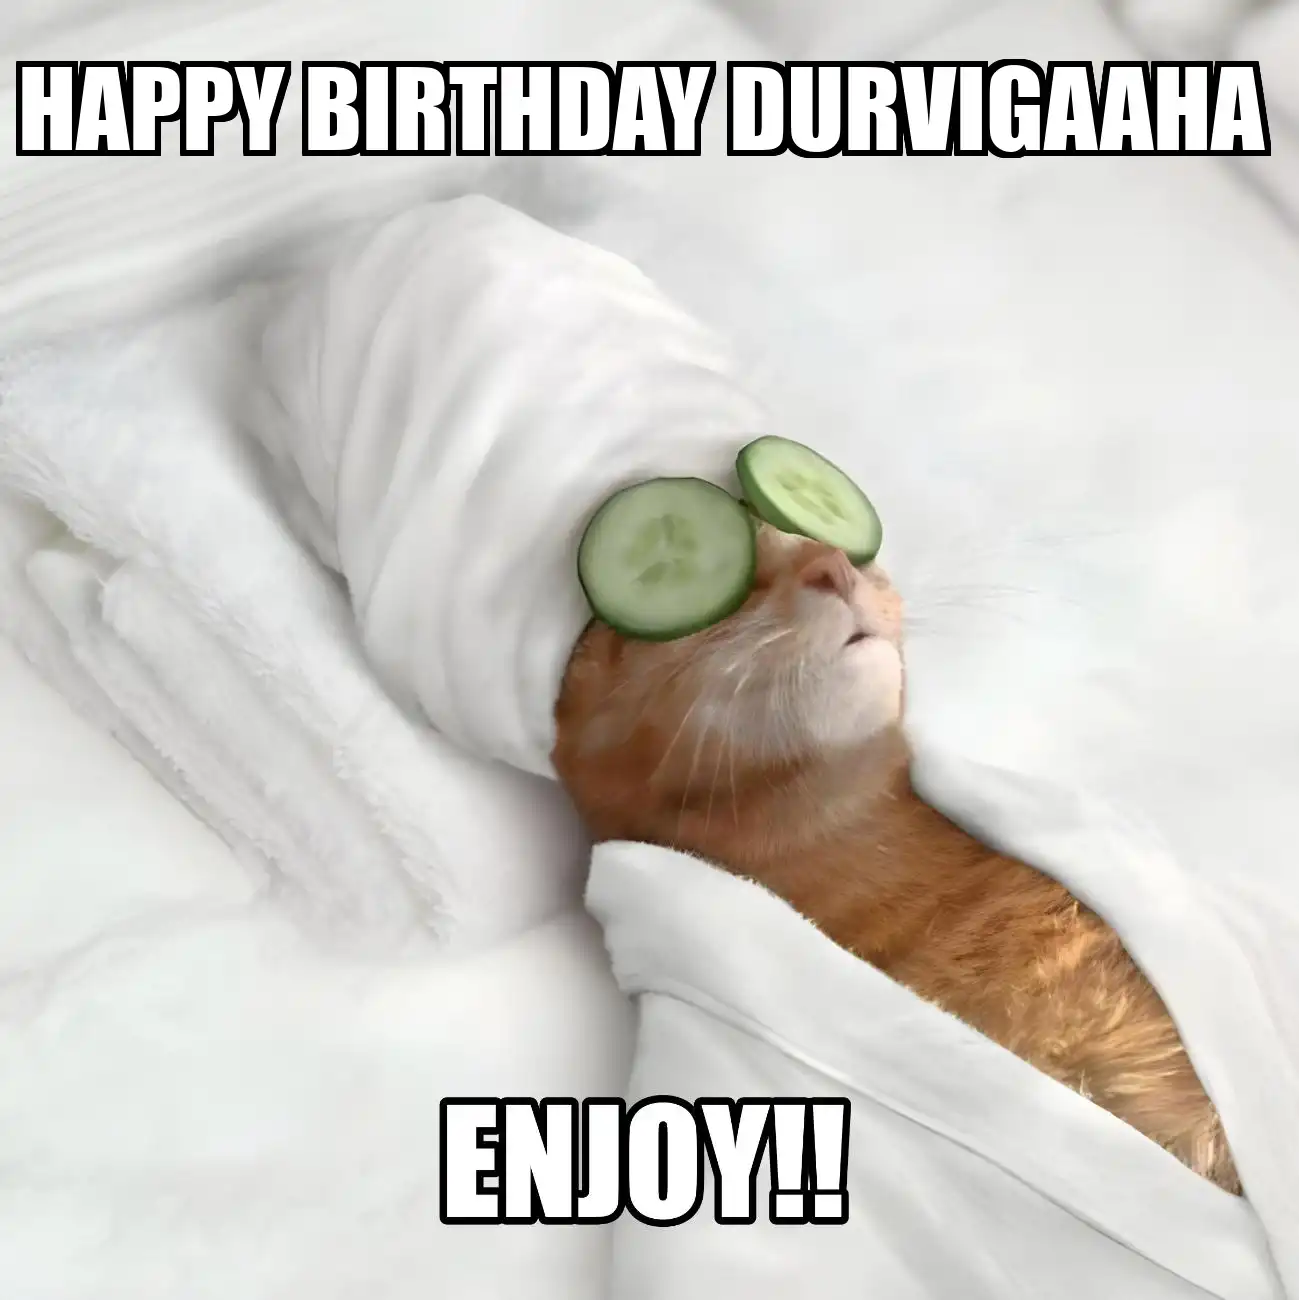 Happy Birthday Durvigaaha Enjoy Cat Meme